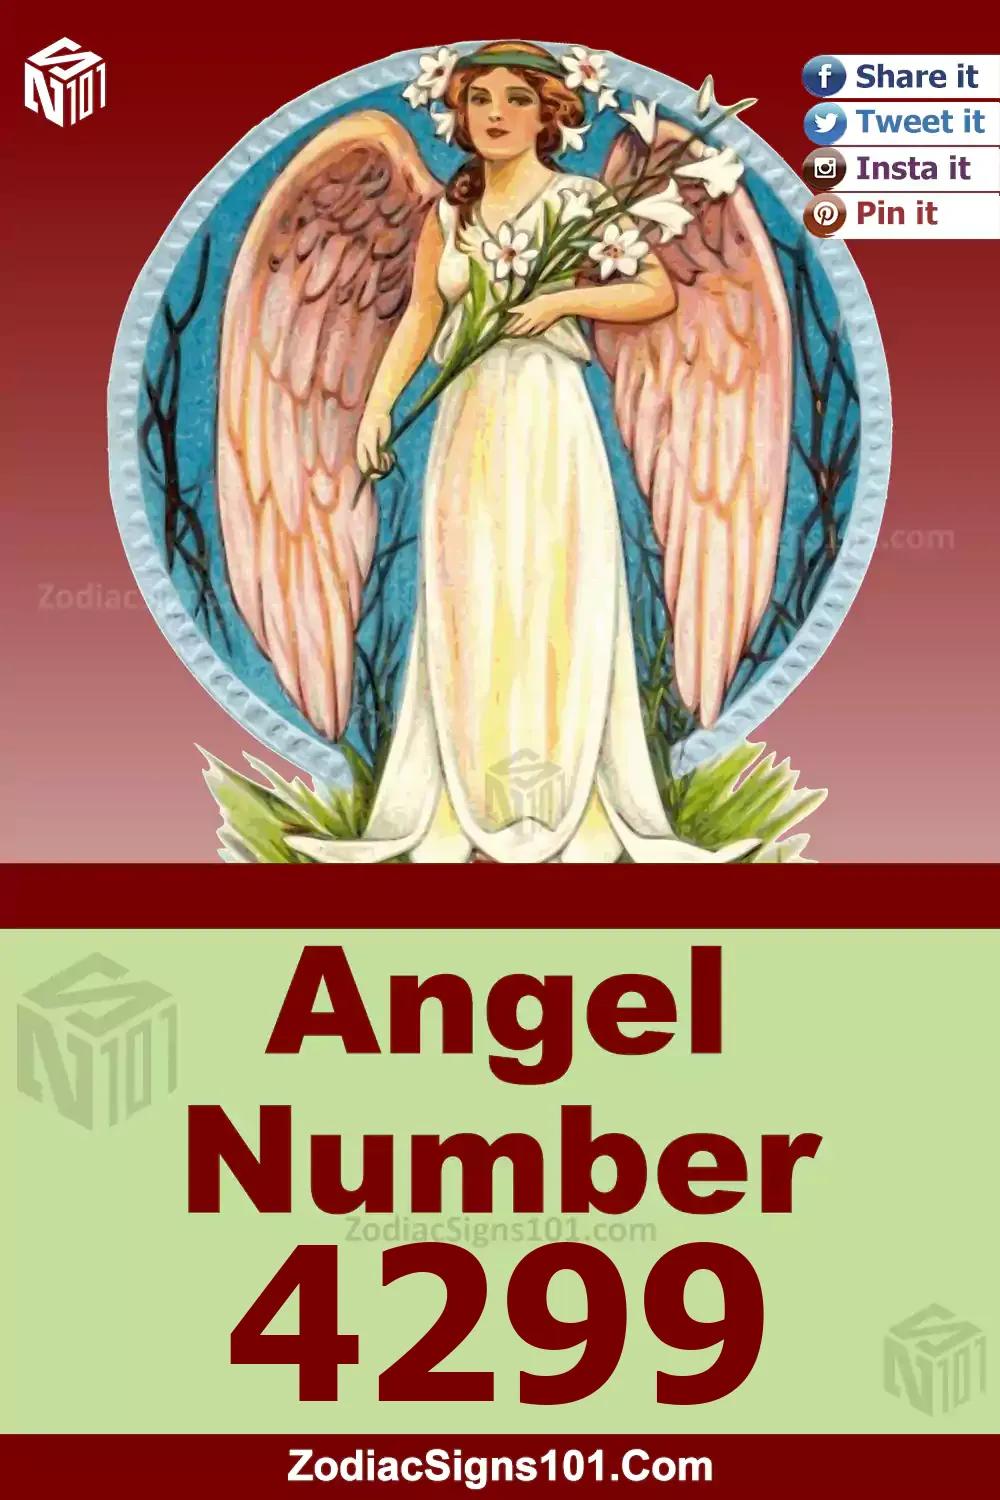 4299-Angel-Number-Meaning.jpg